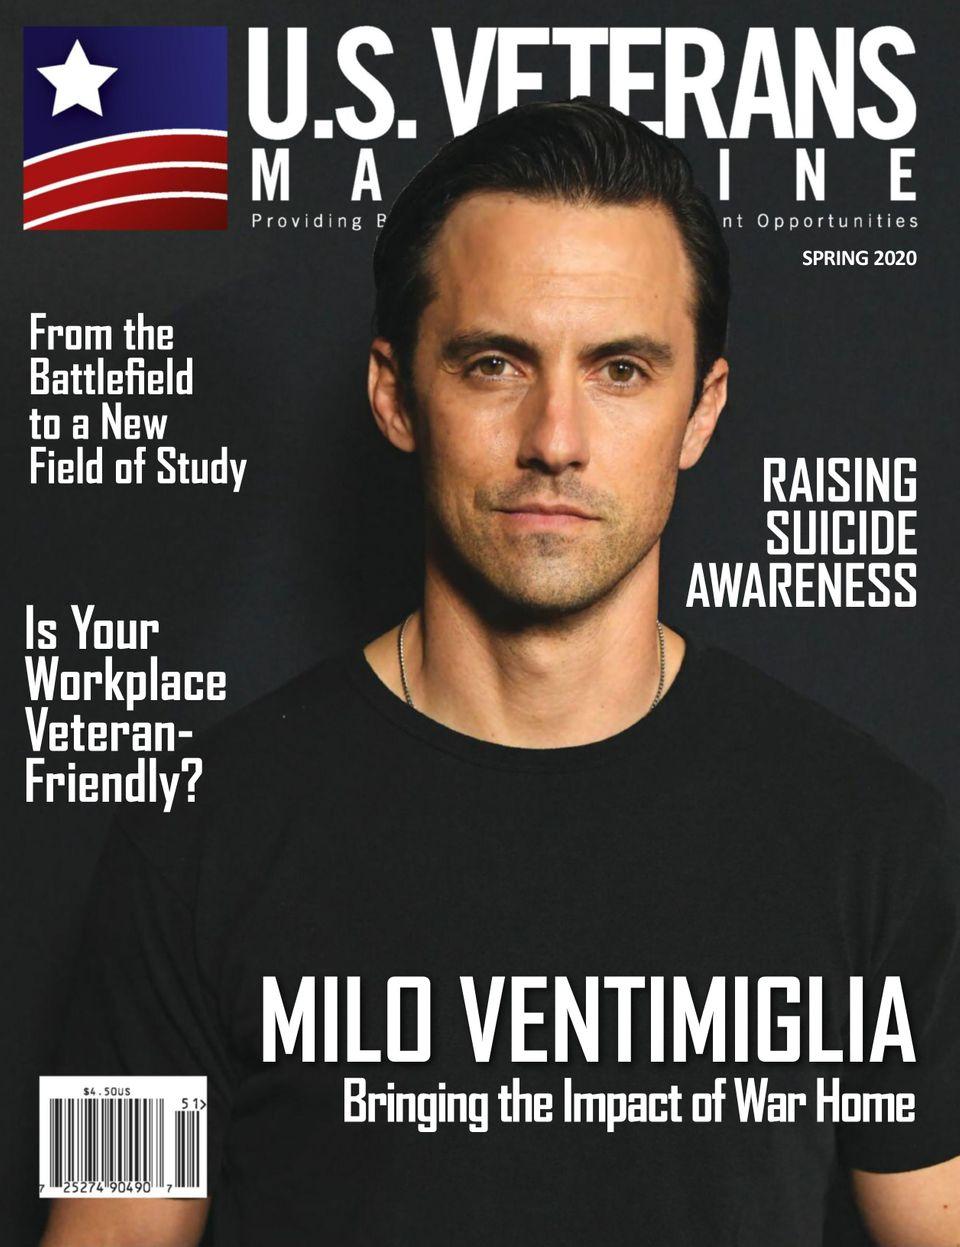 U.S. Veterans Magazine Cover Image